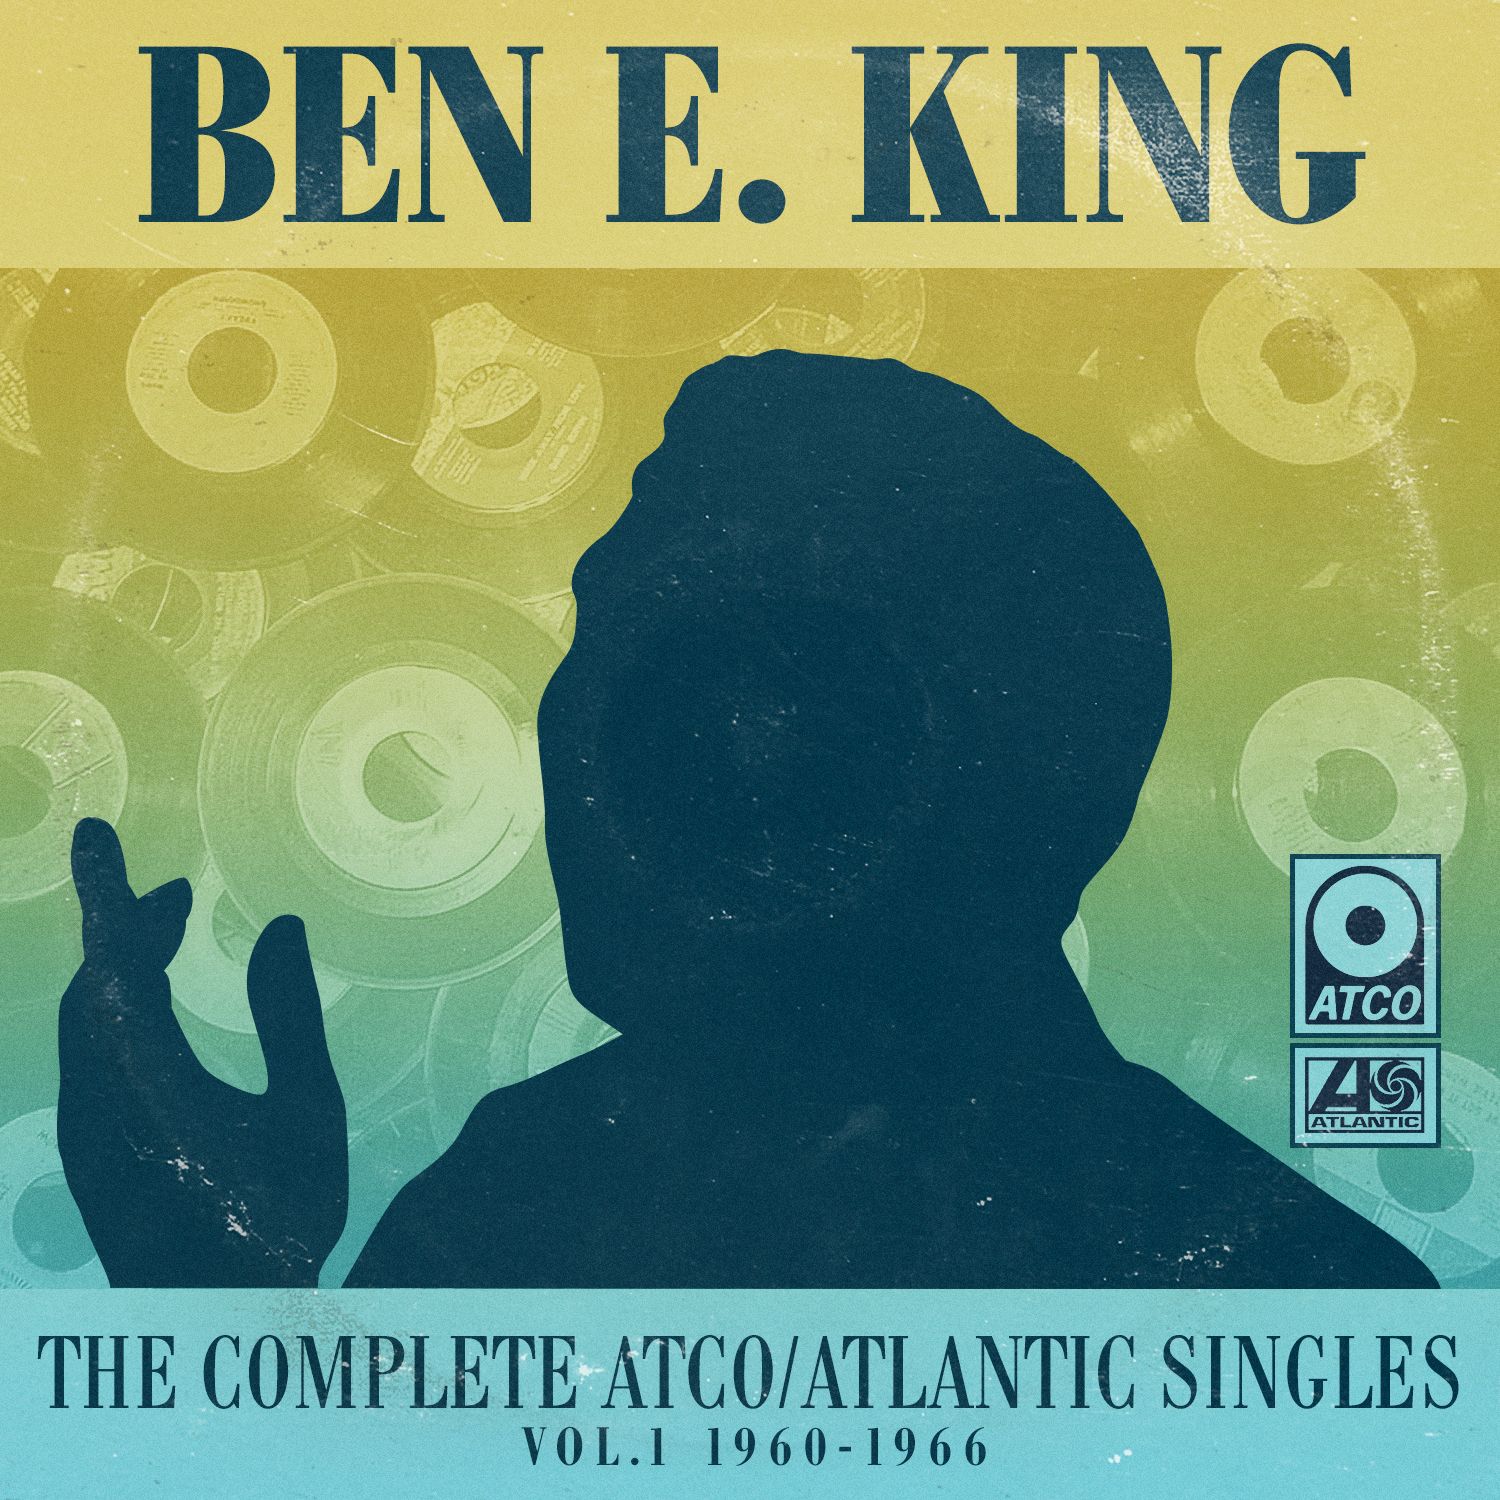 The Complete Atco/Atlantic Singles Vol. 1: 1960-1966